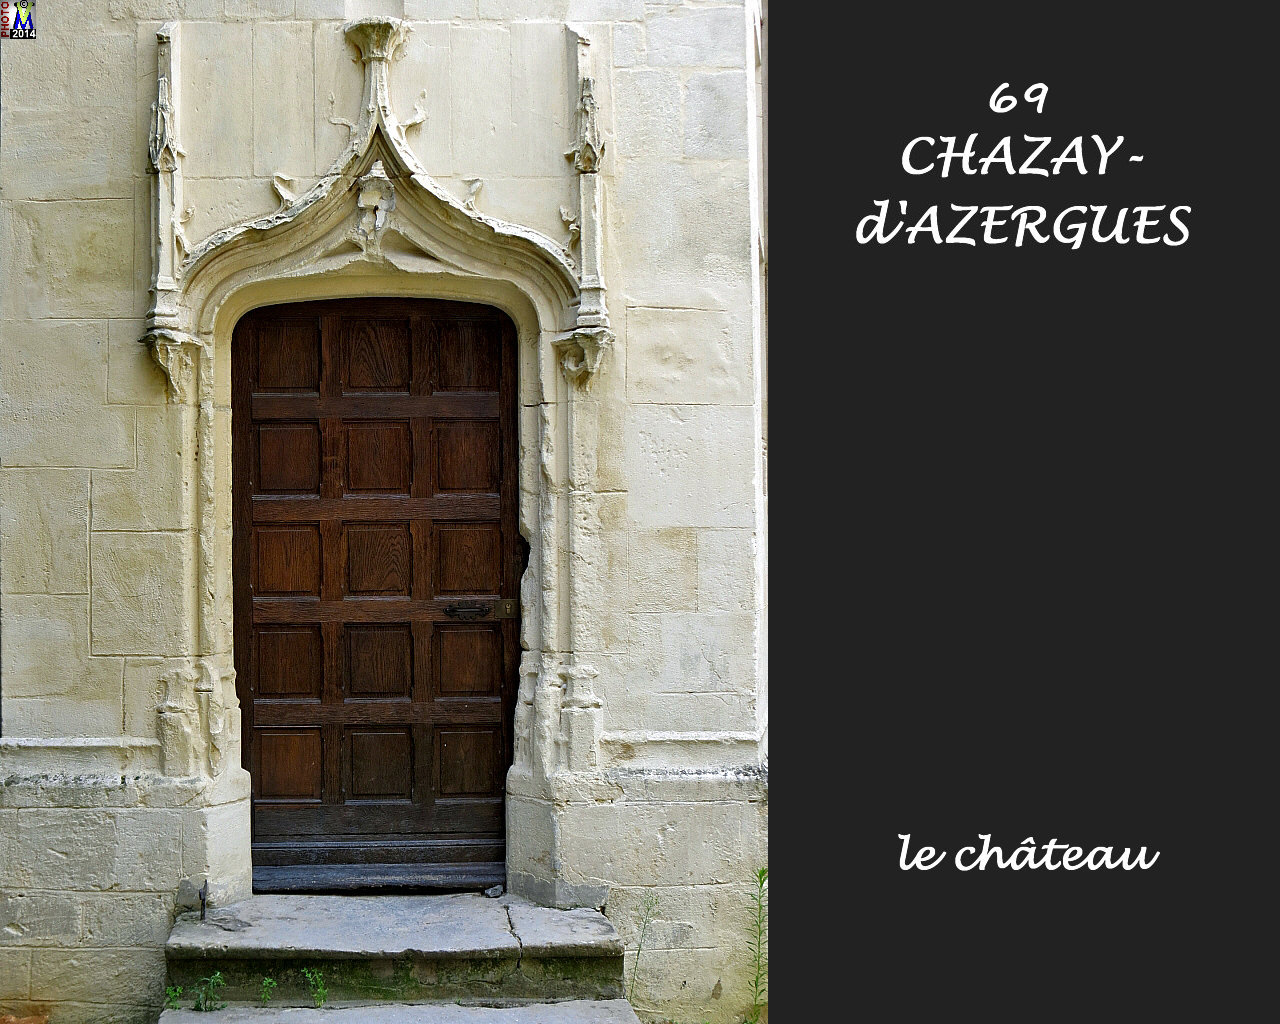 69CHAZAY-AZERGUES_chateau_112.jpg